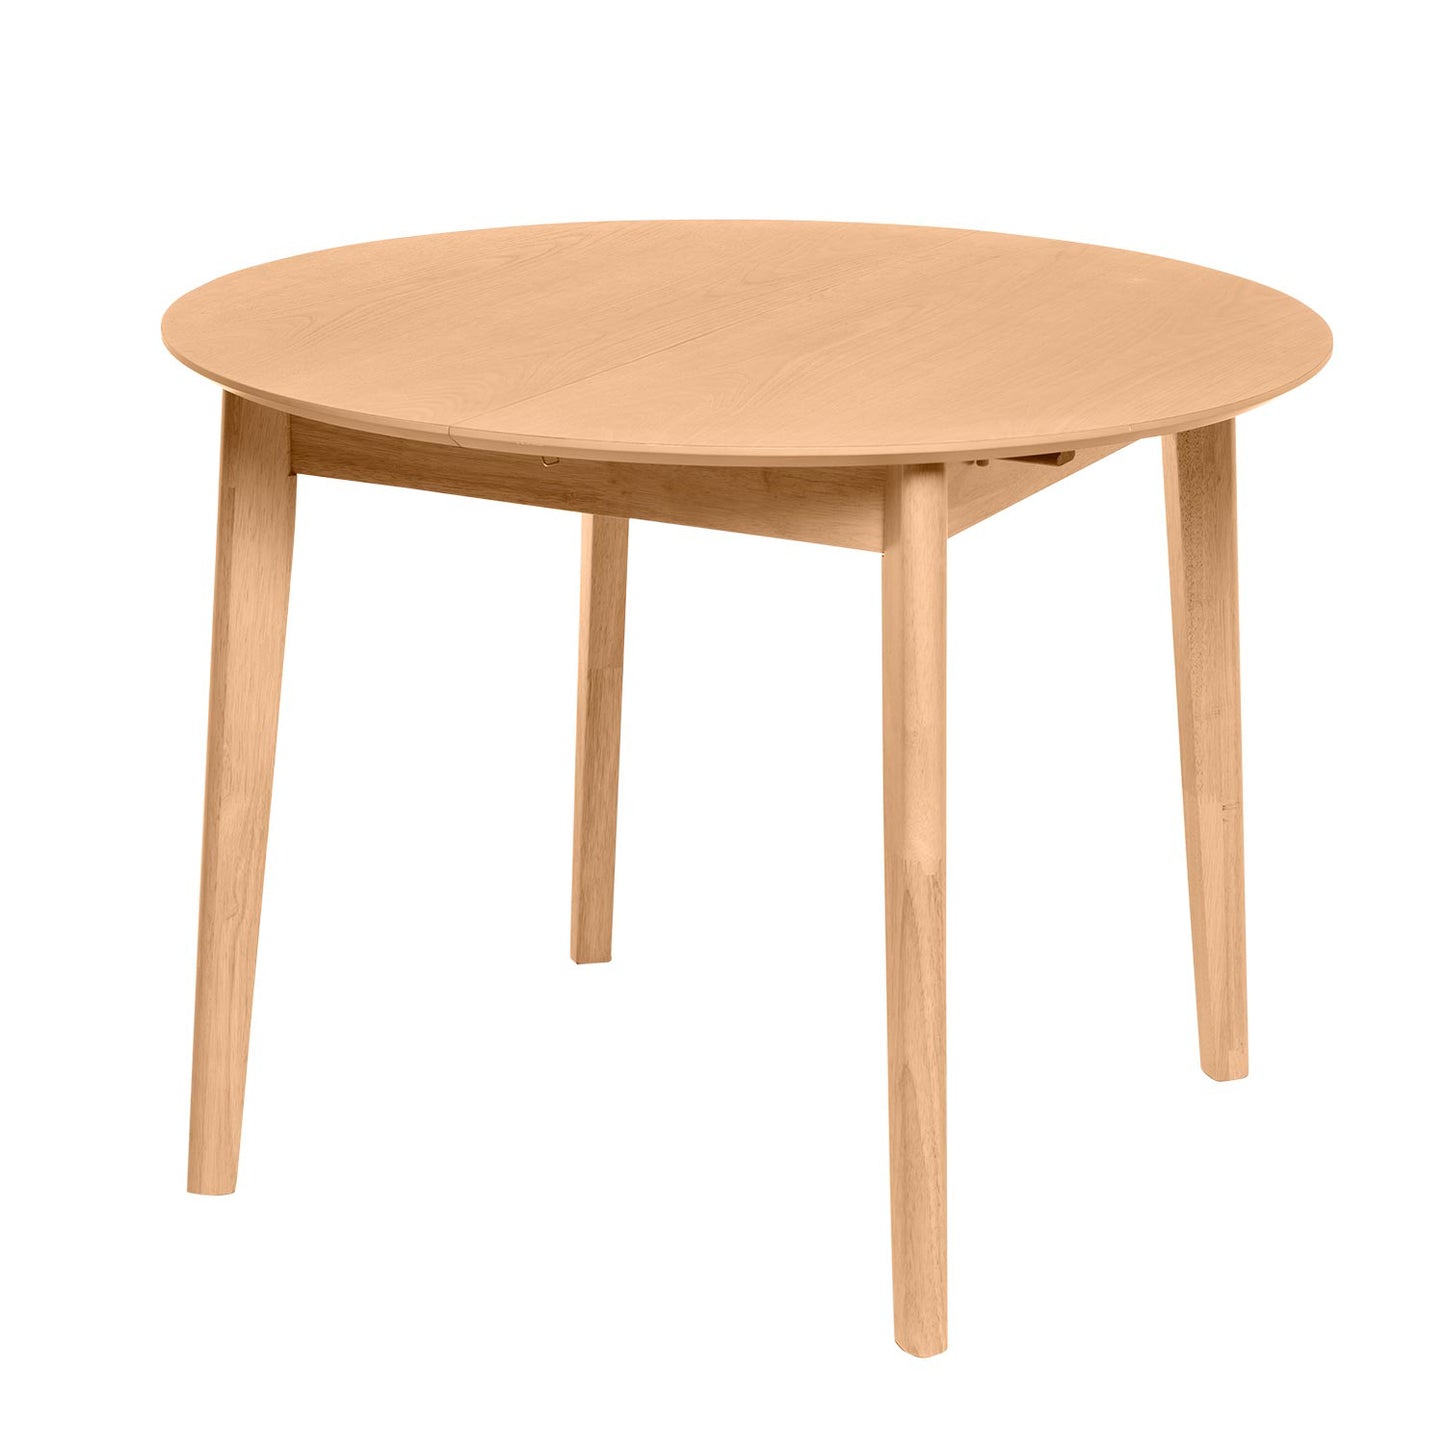 Liana extendable dining table